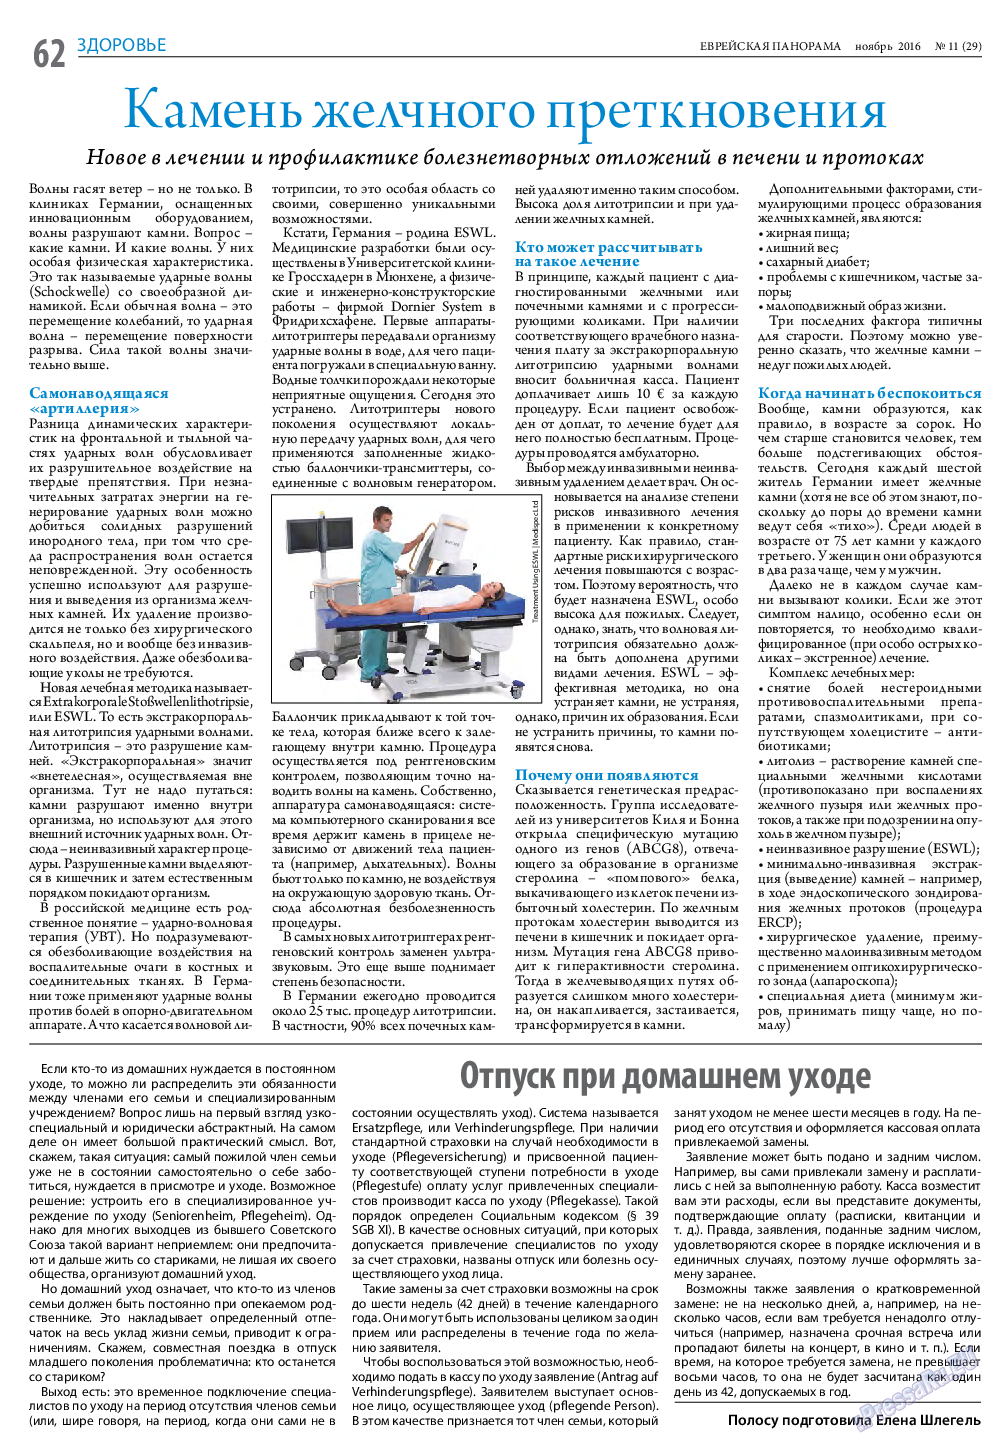 Еврейская панорама, газета. 2016 №11 стр.62